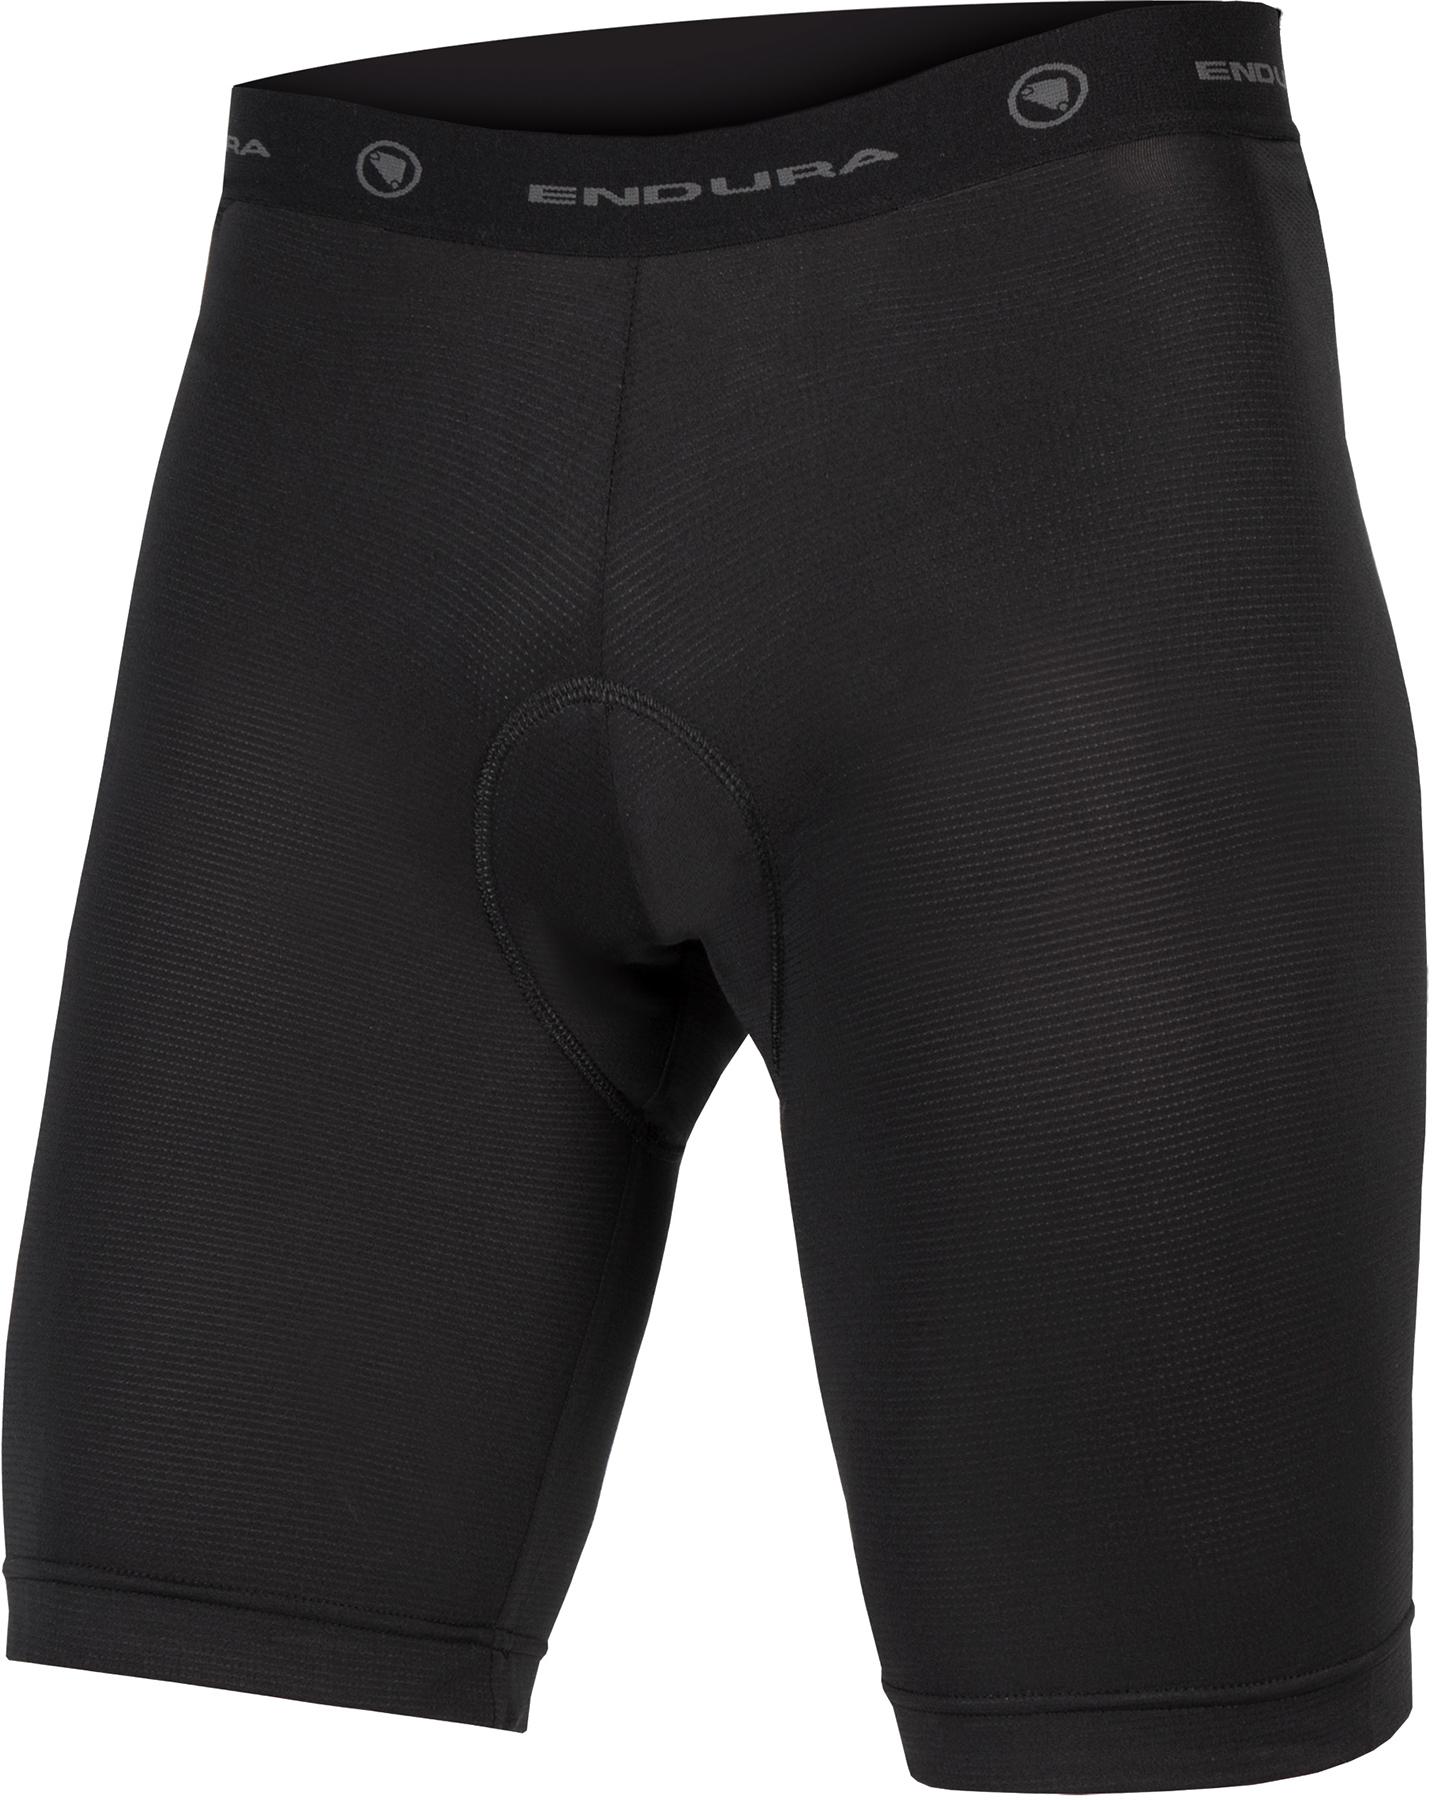 Endura Padded Liner Shorts Ii - Black